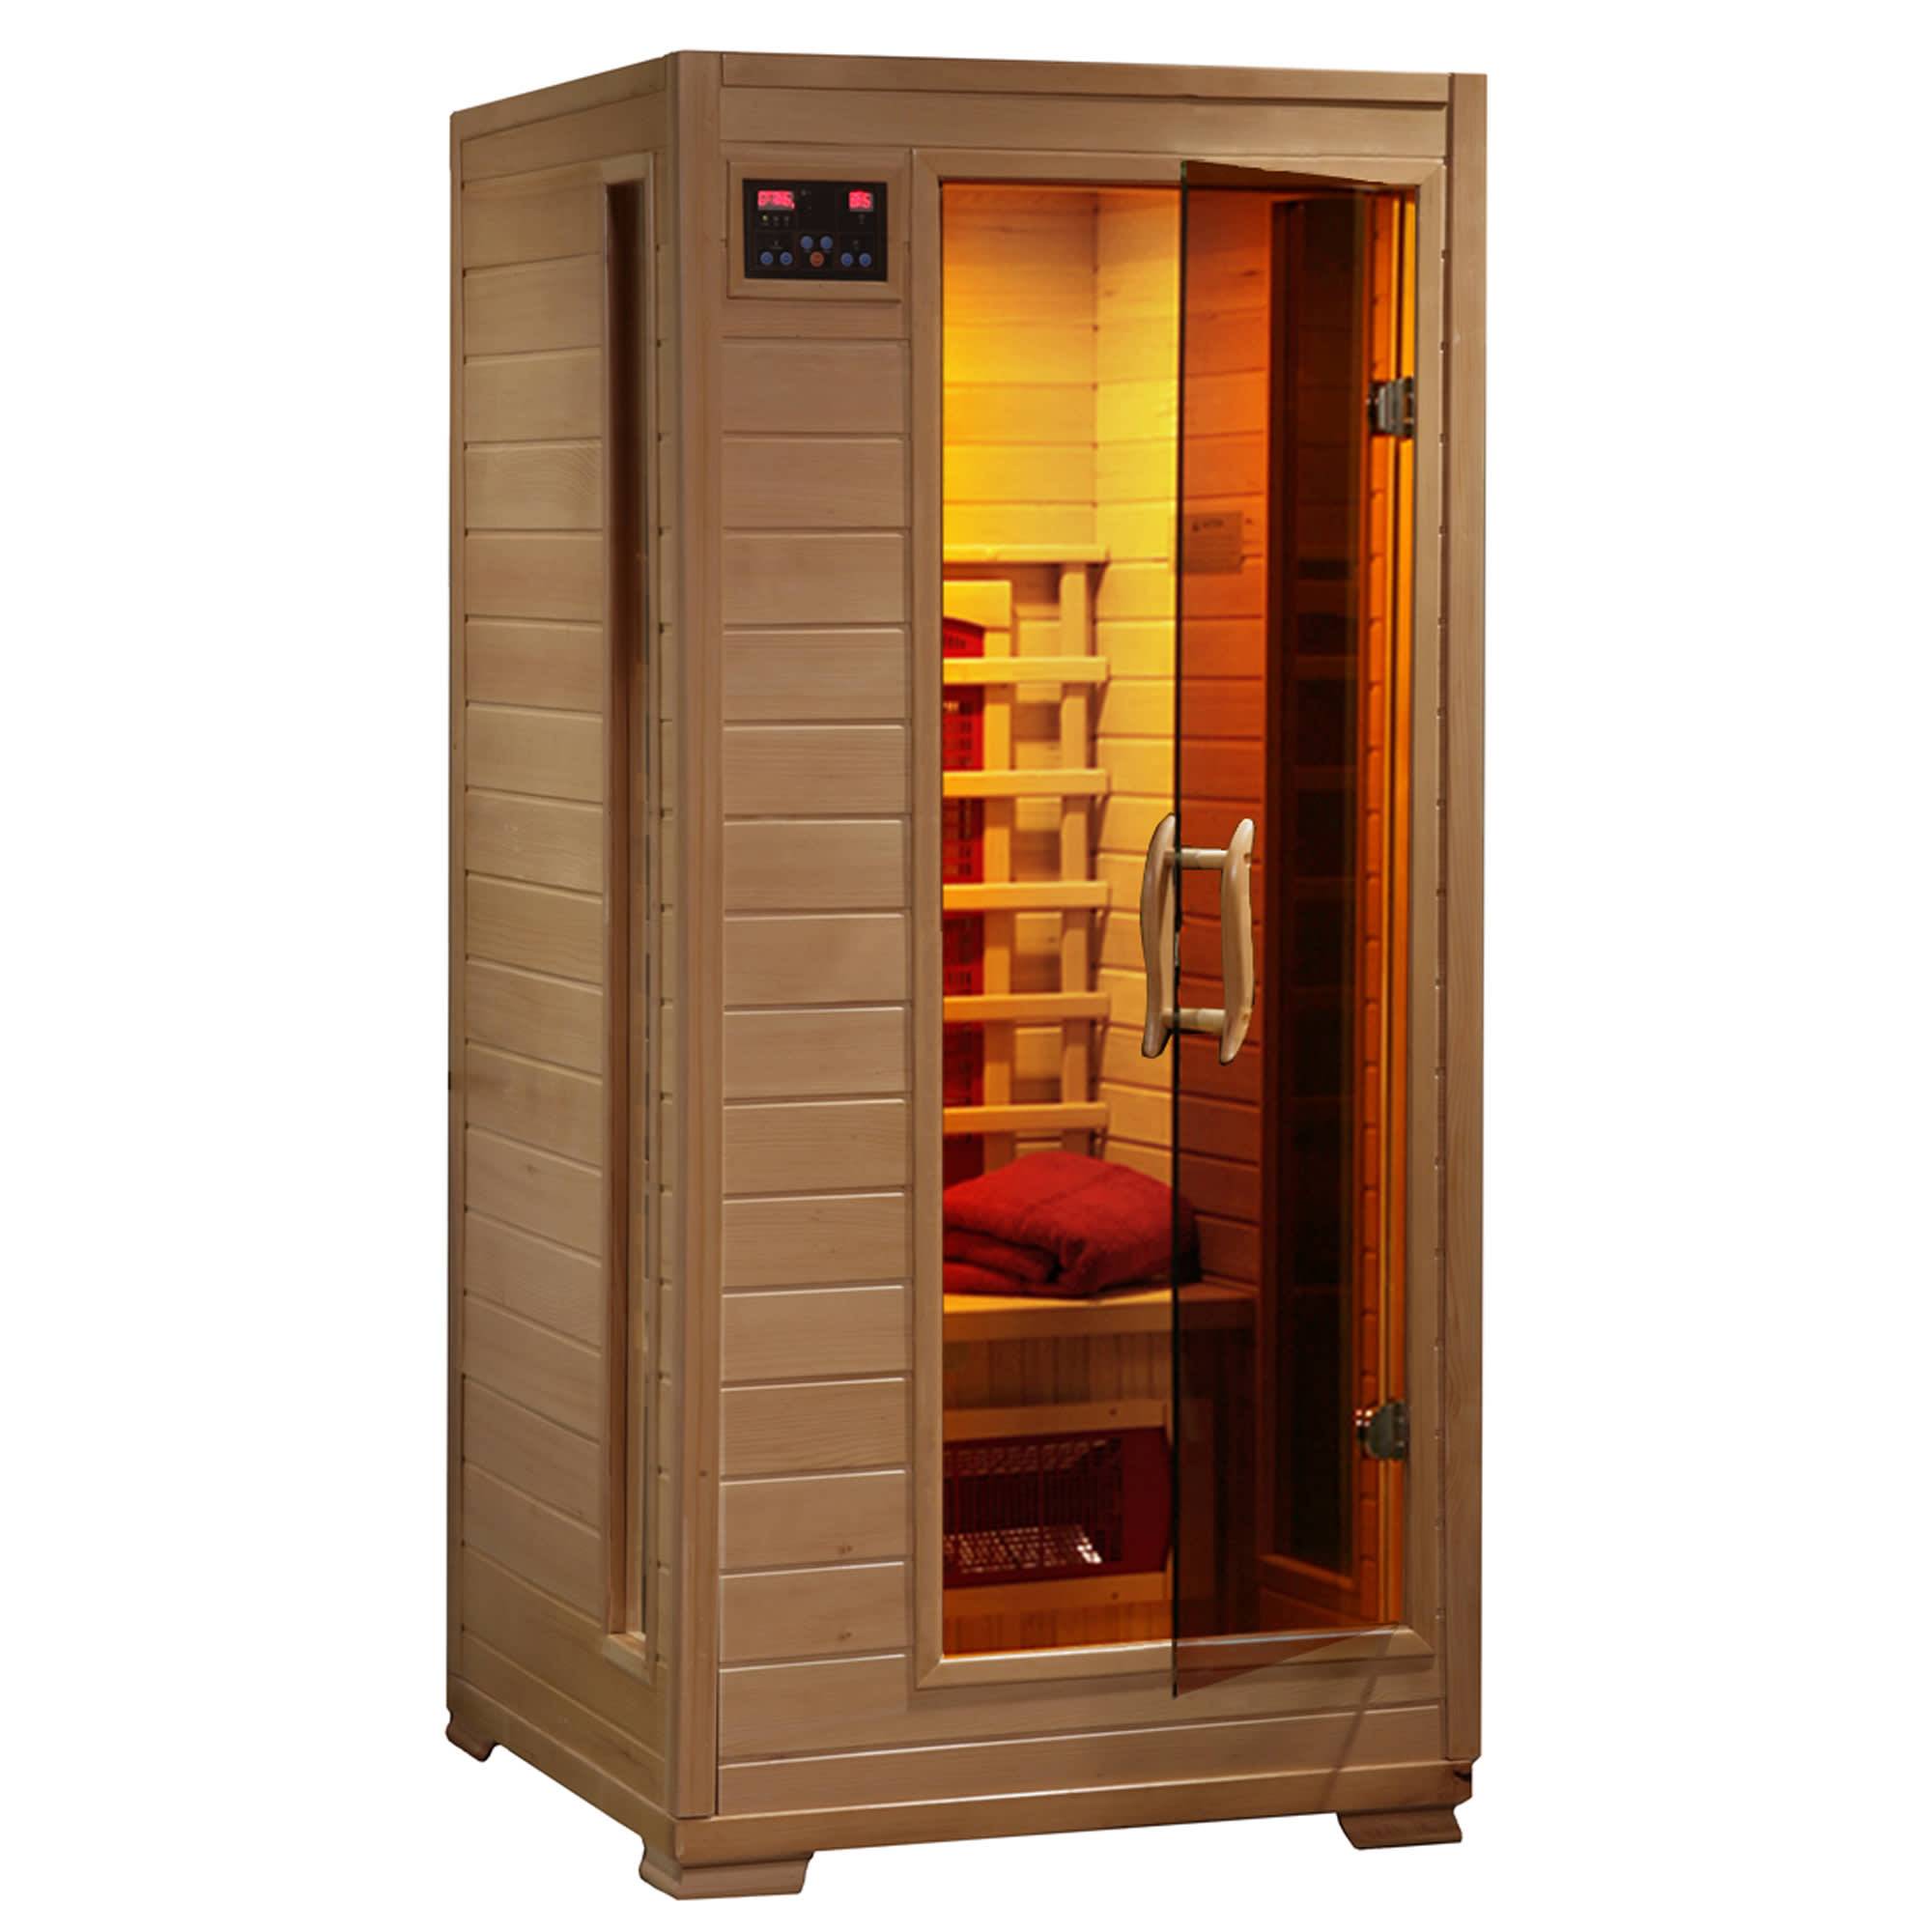 Buena Vista - 1 Person Ceramic Heater Heatwave Infrared Home Sauna